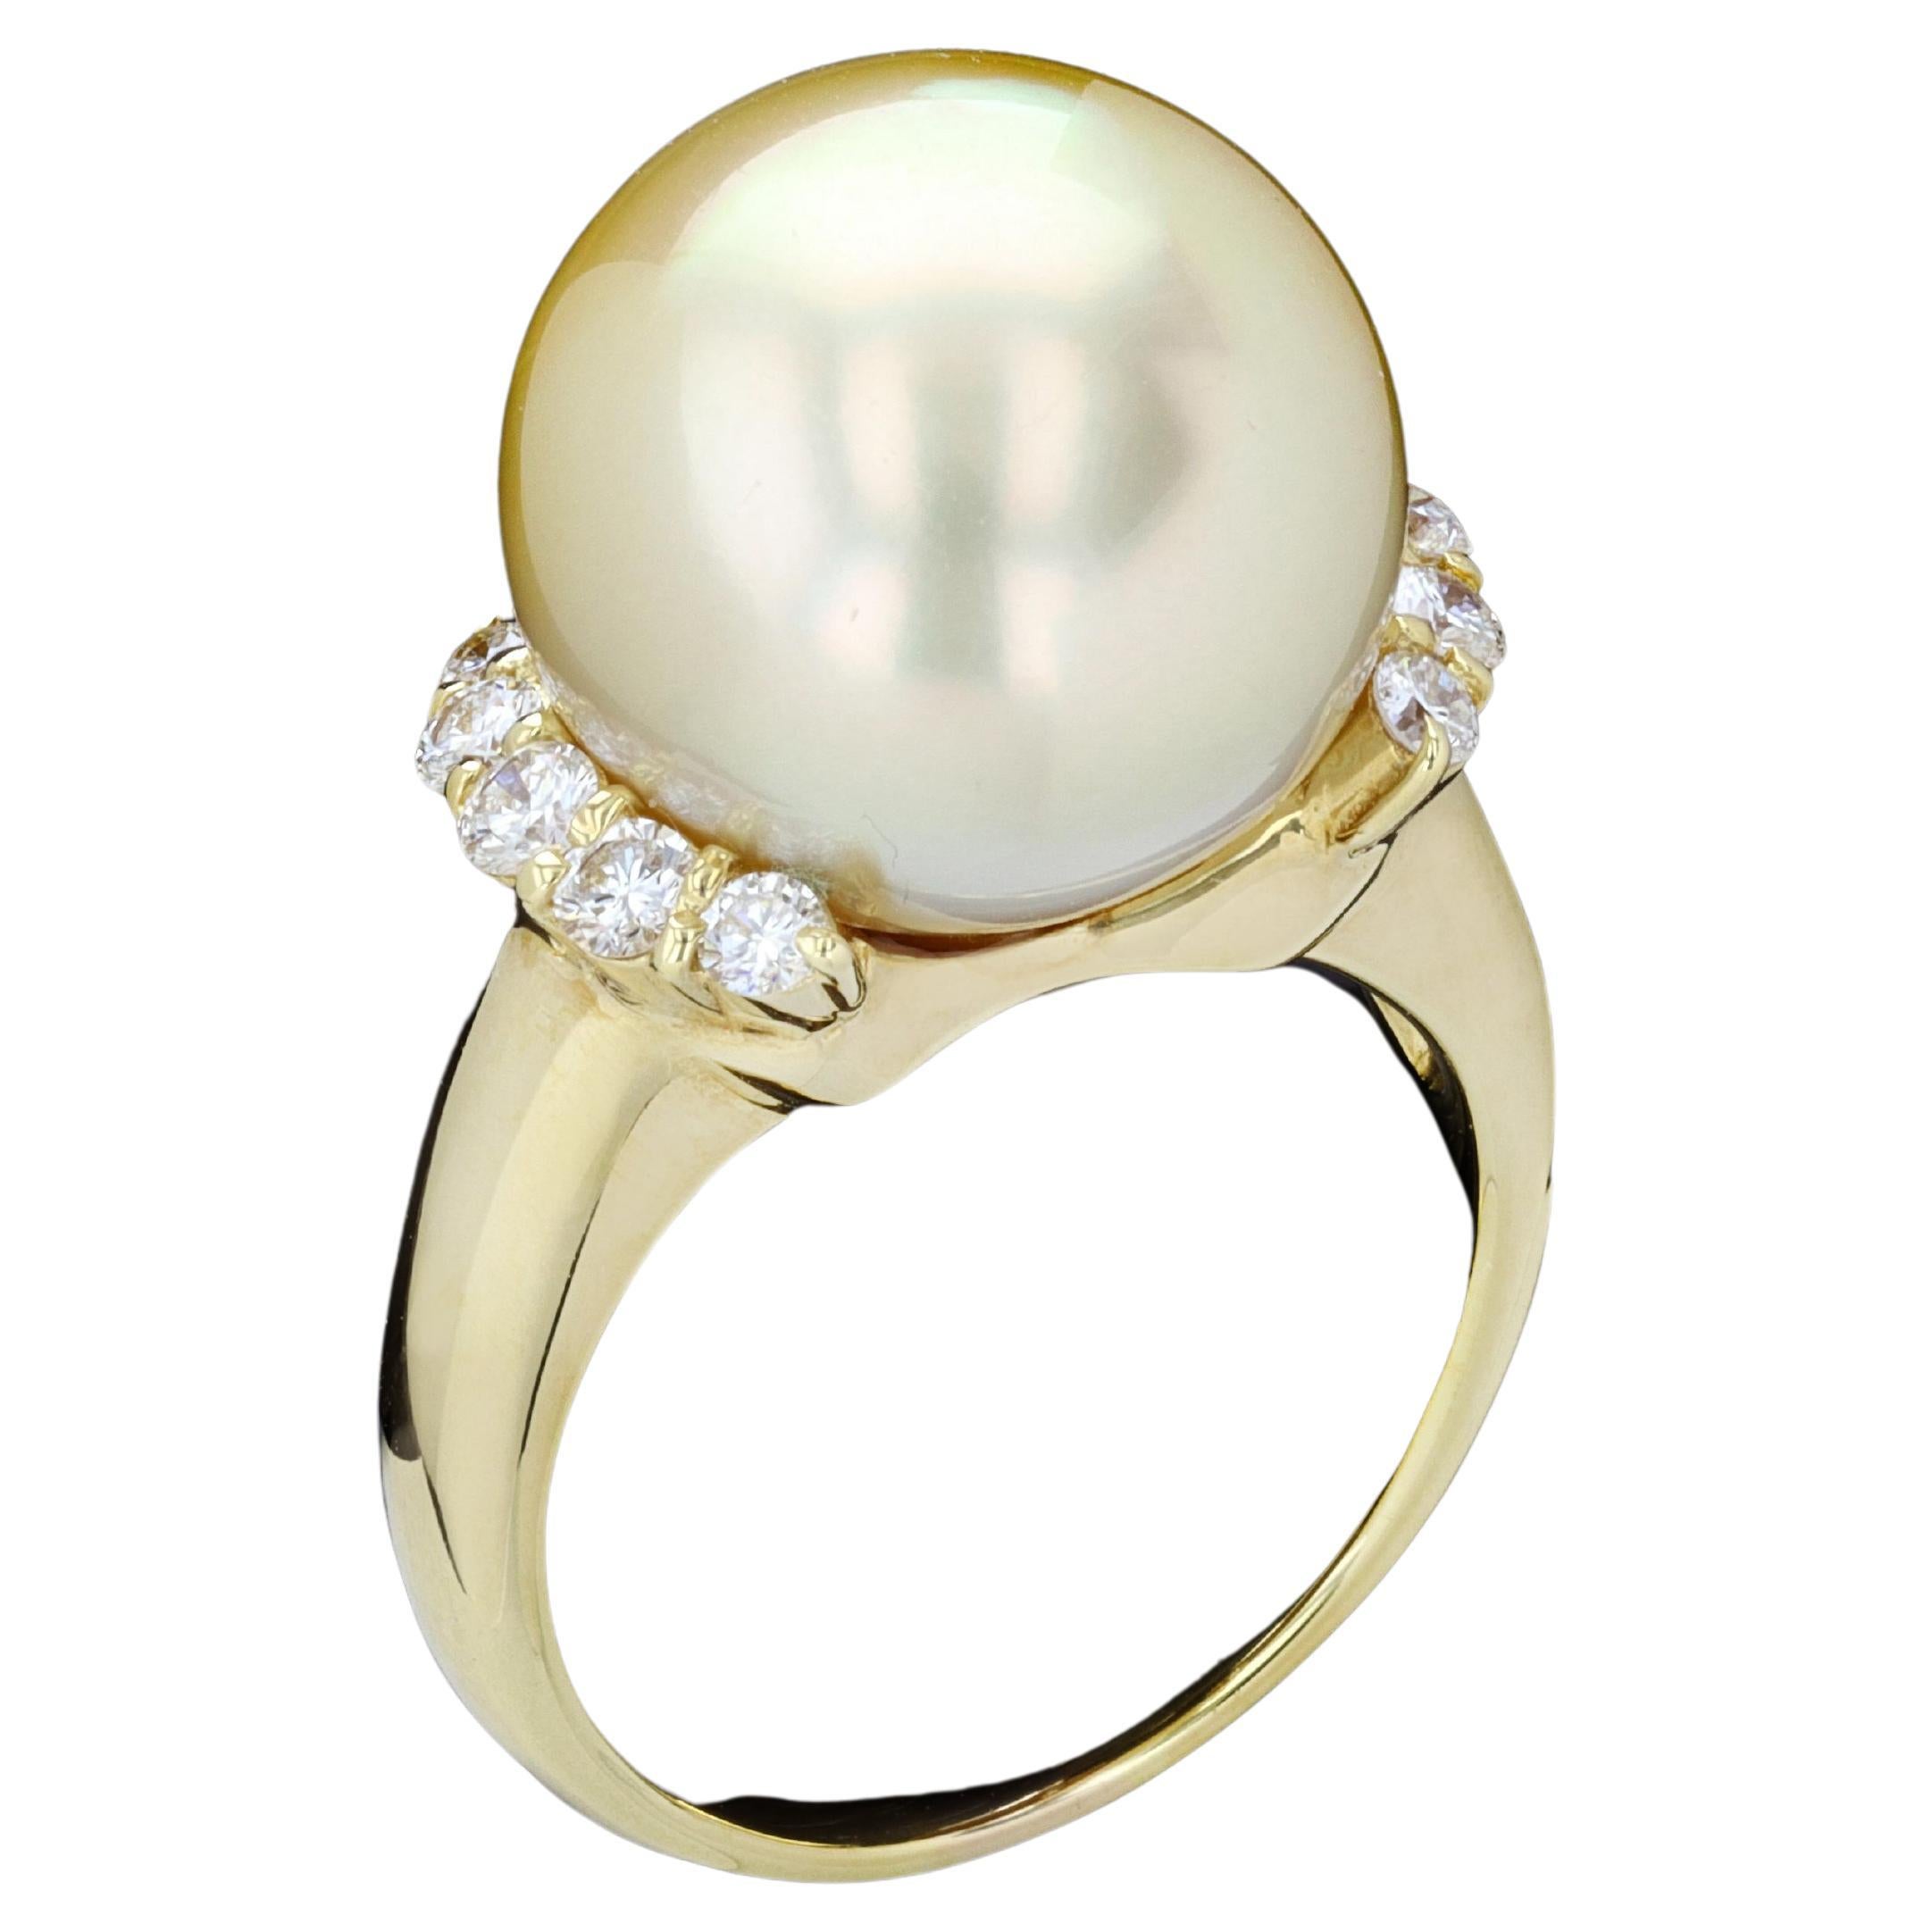 Stylish South Sea Pearl and Diamond Ring